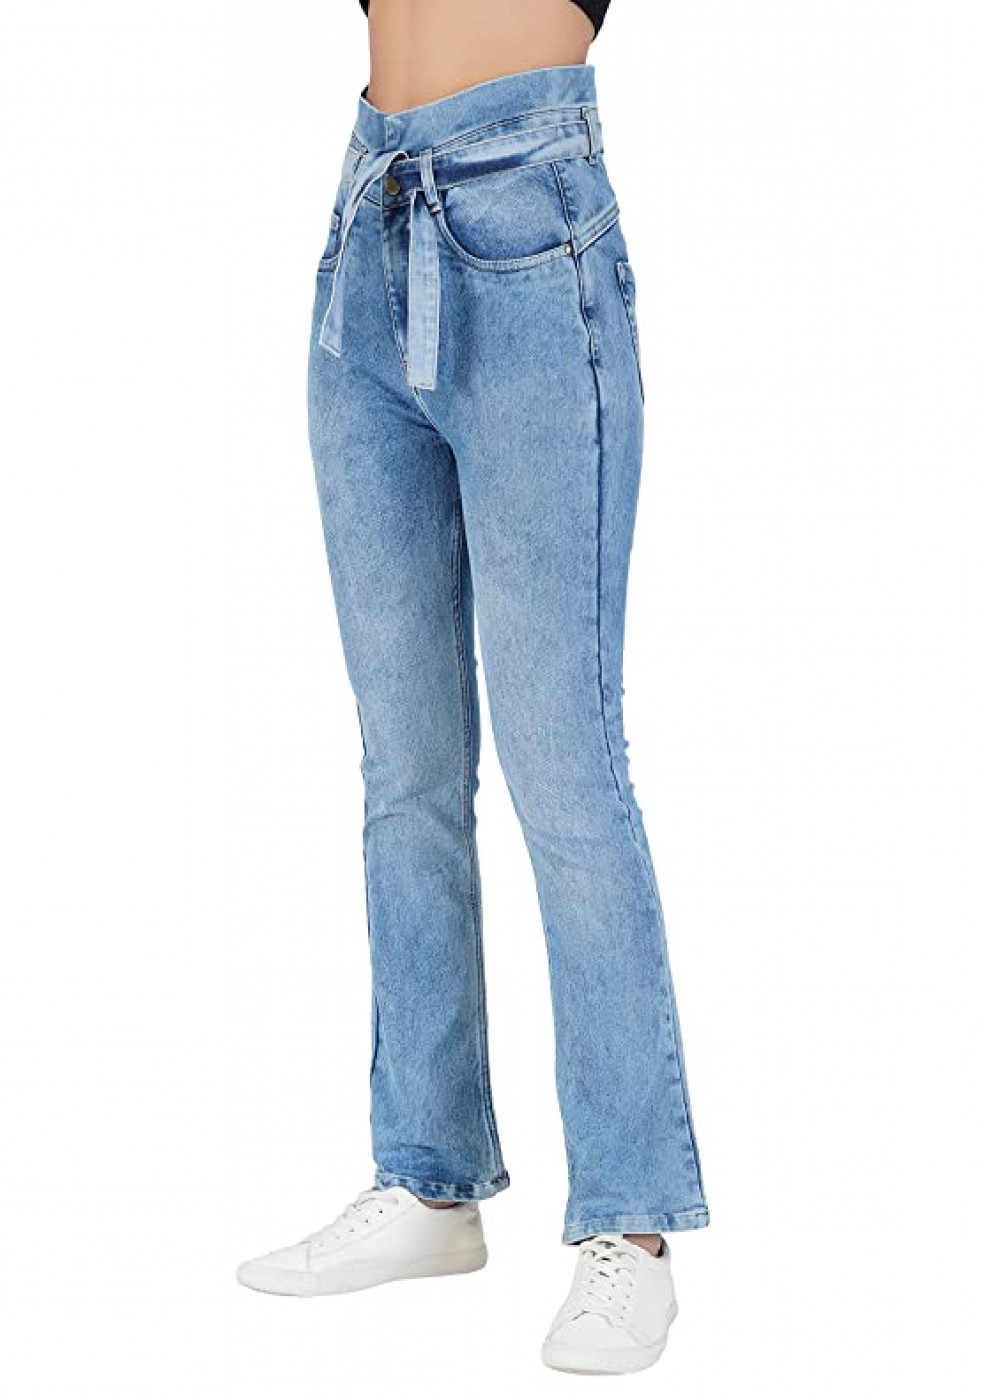 Women Stretchable Cotton ICE Color Jeans